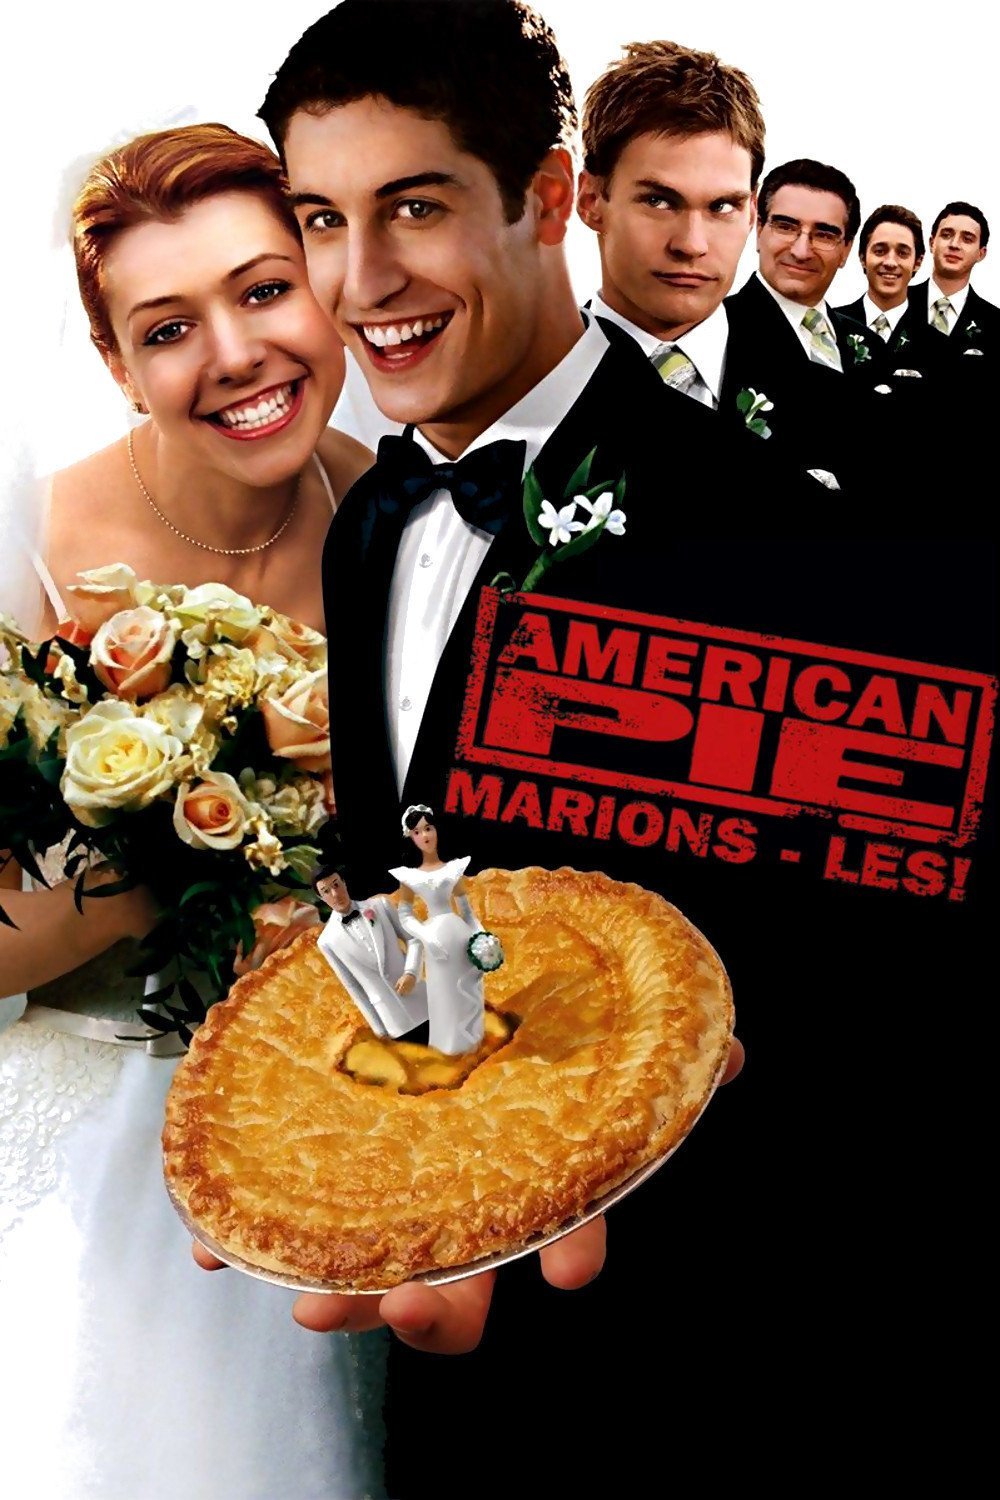 ? American Pie 3 : Marions-les !